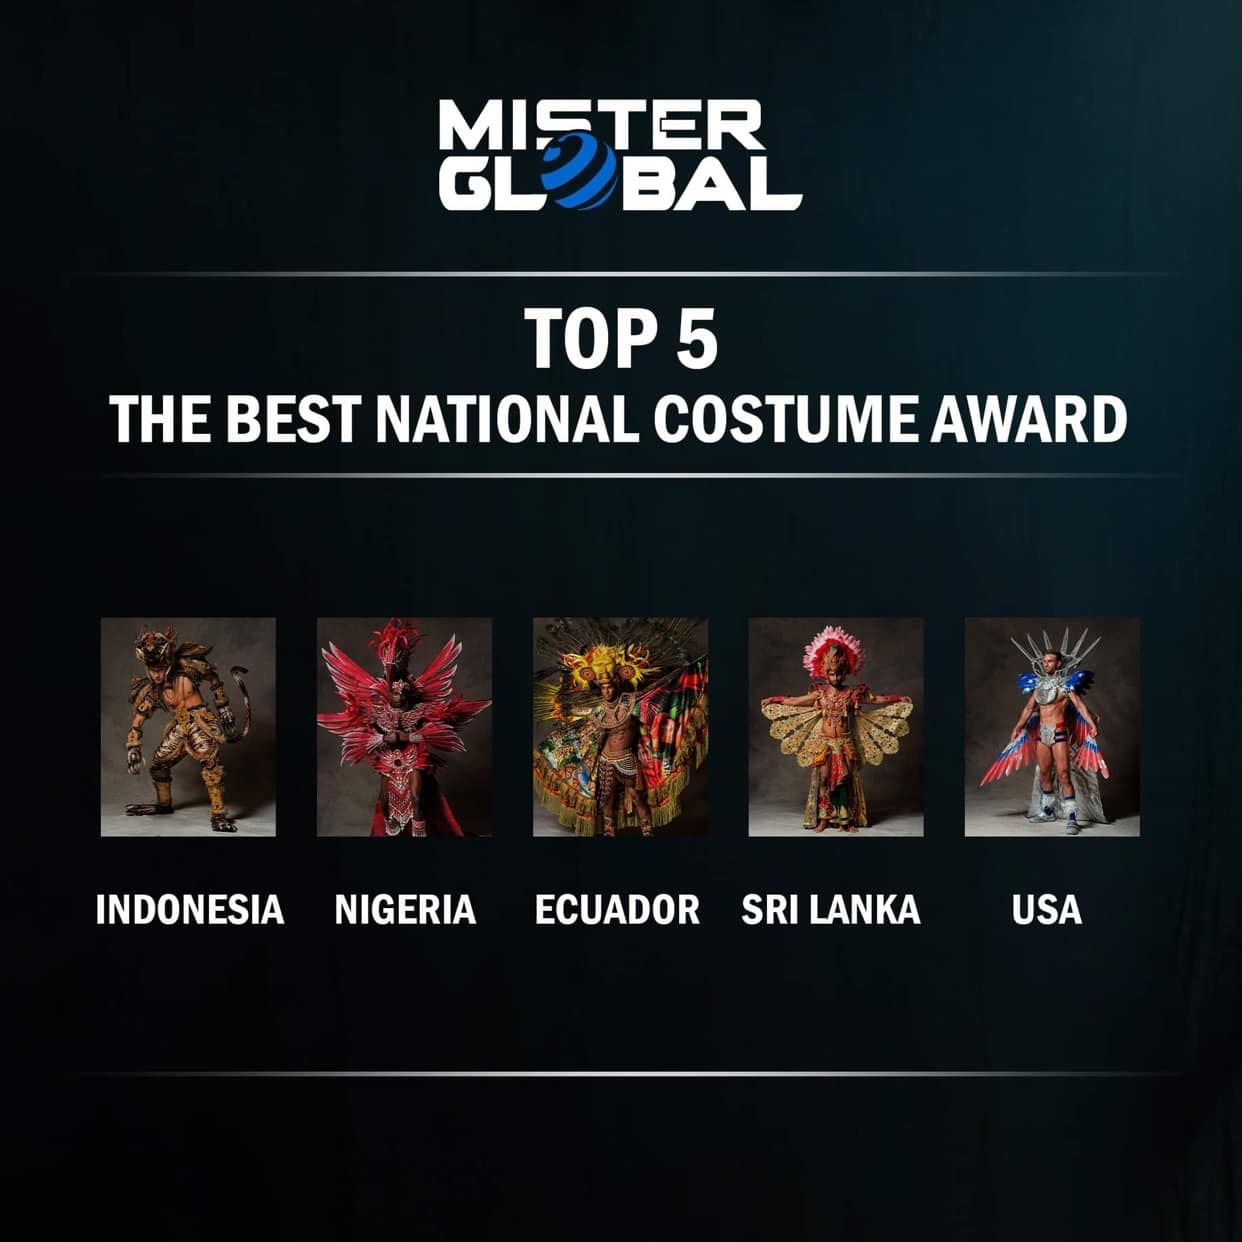 Top 5 for the Best National Costume Award: Indonesia, Nigeria, Ecuador, Sri Lanka, and USA